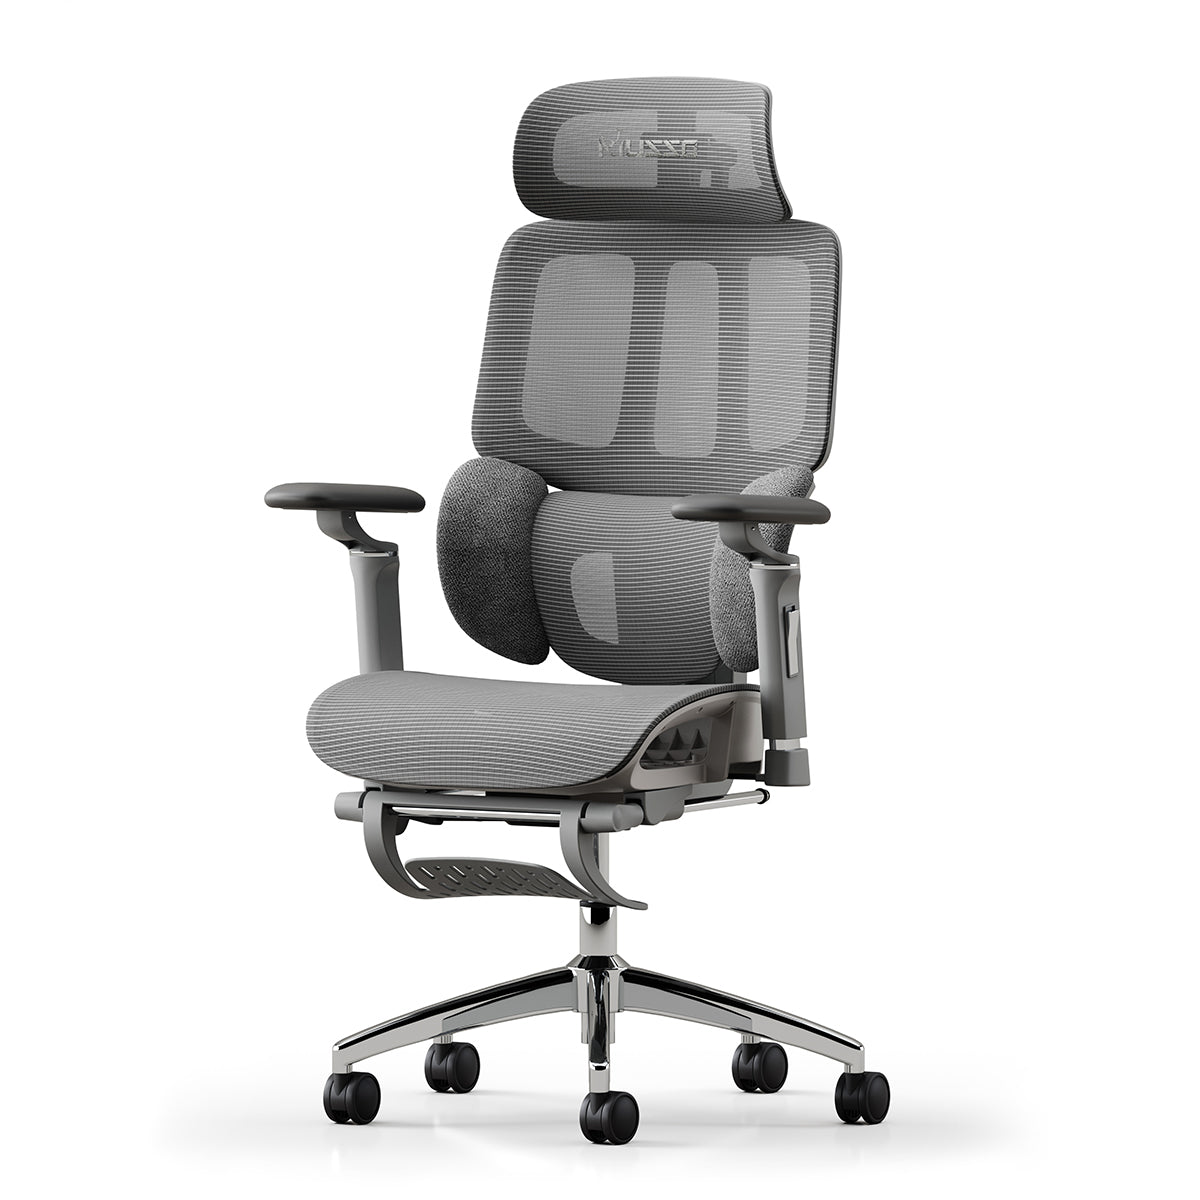 musso h80 pro ergonomic chair